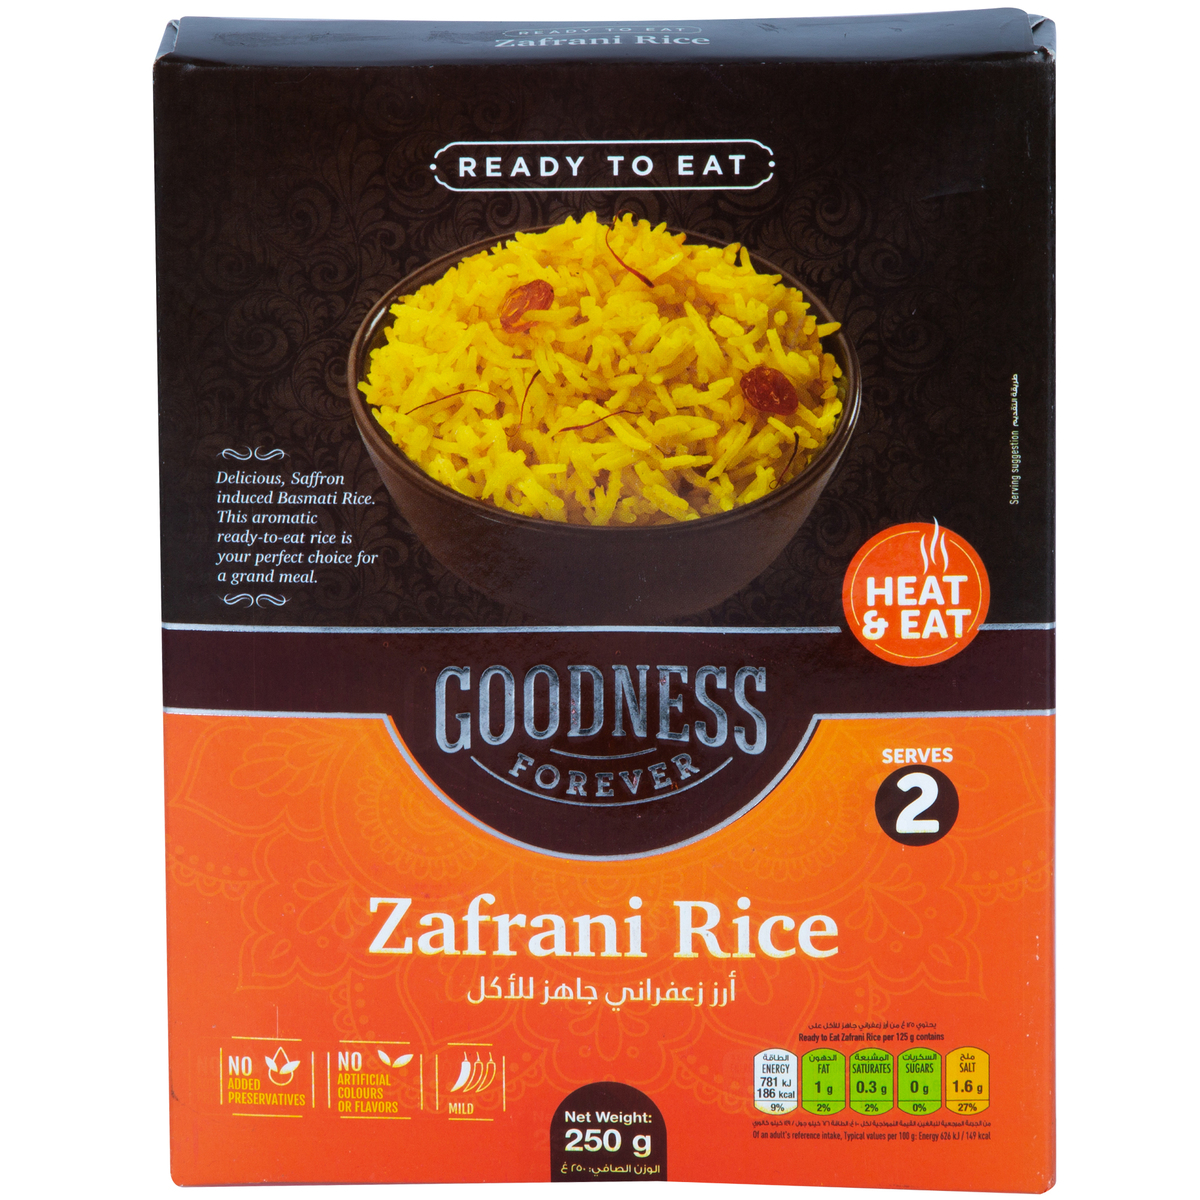 LuLu Goodness Forever Ready To Eat Zafrani Rice 250 g